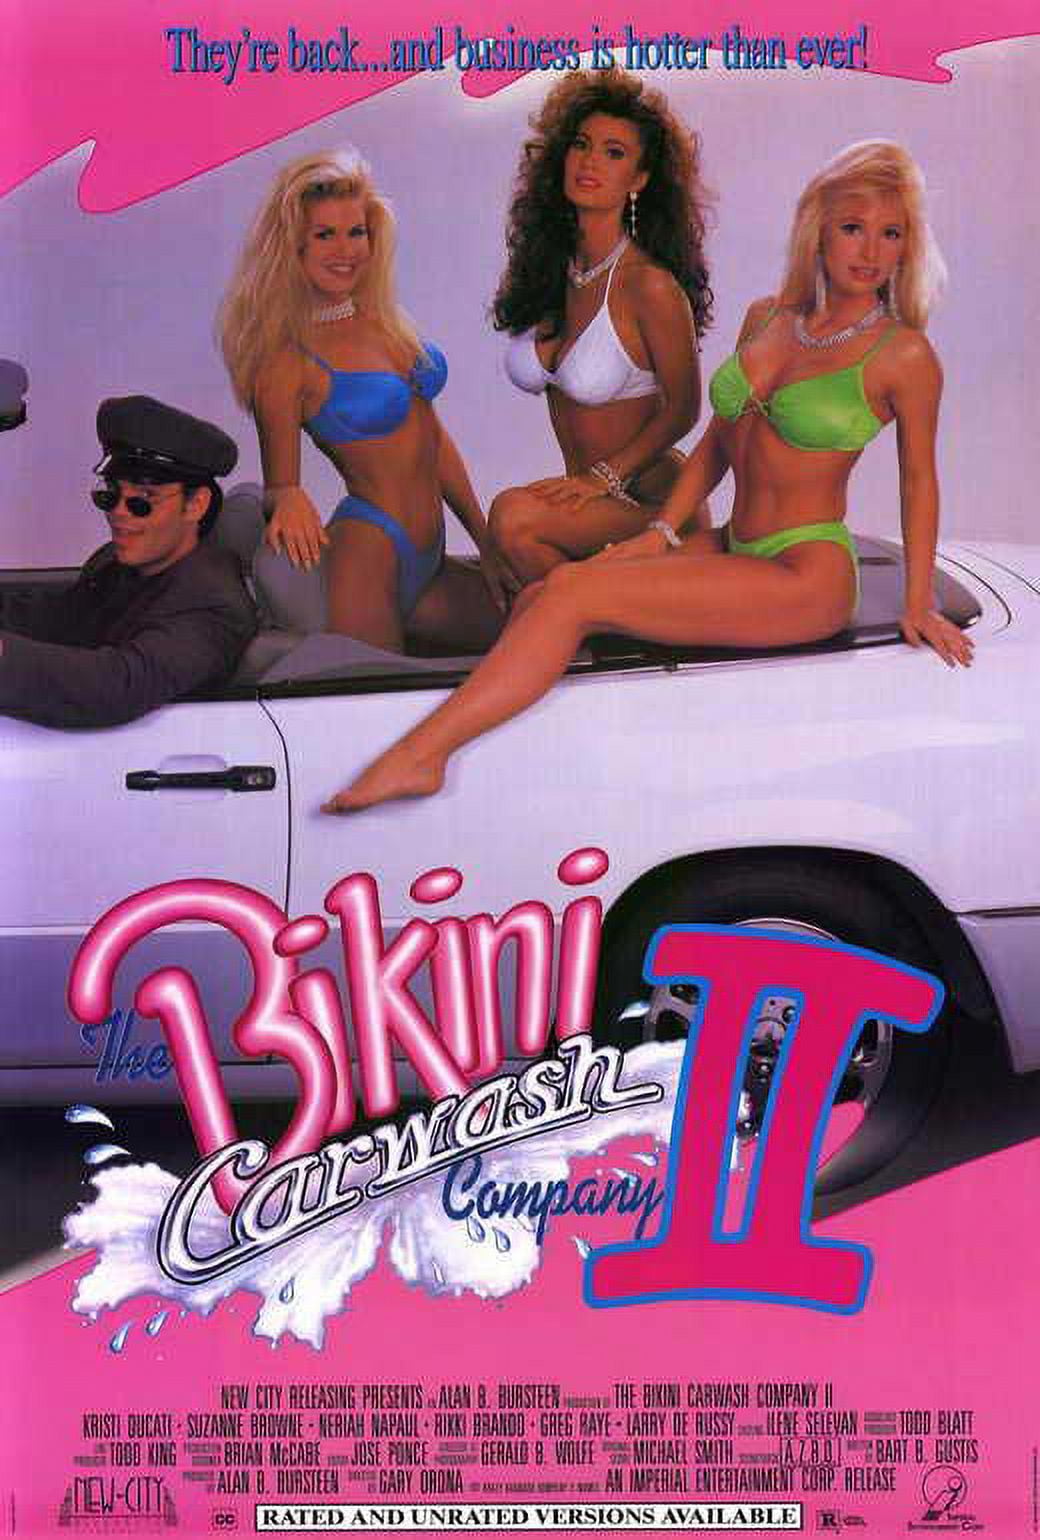 dennis mccroskey recommends Bikini Carwash Company 2